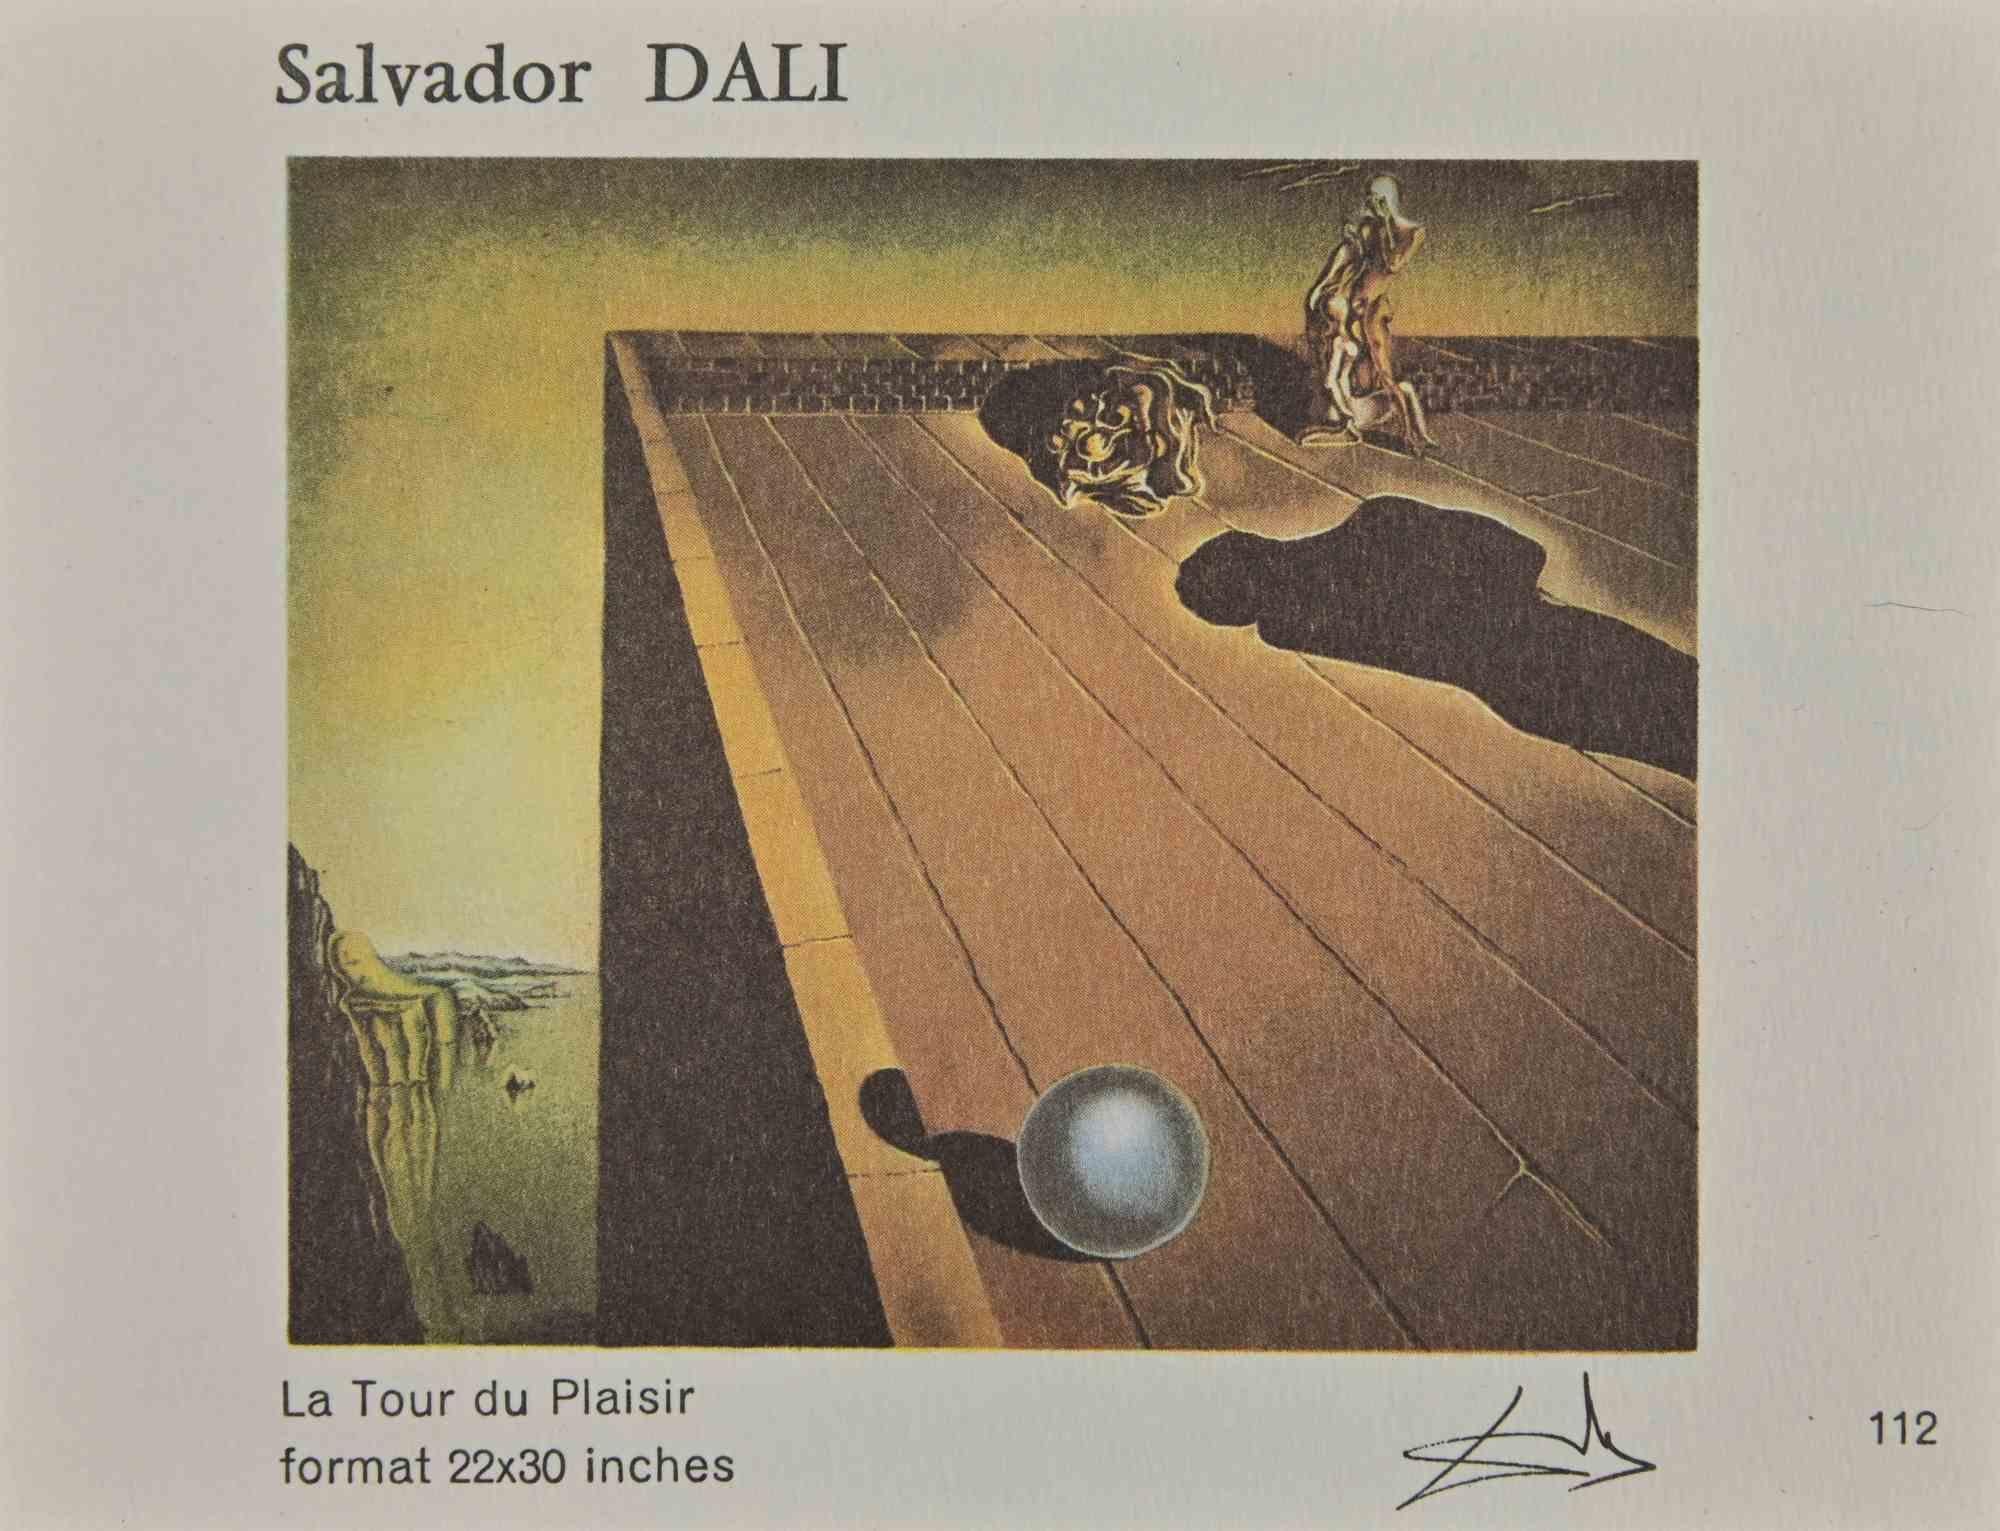 Collection of Vintage Cards After Salvador Dalì - 1980s For Sale 3